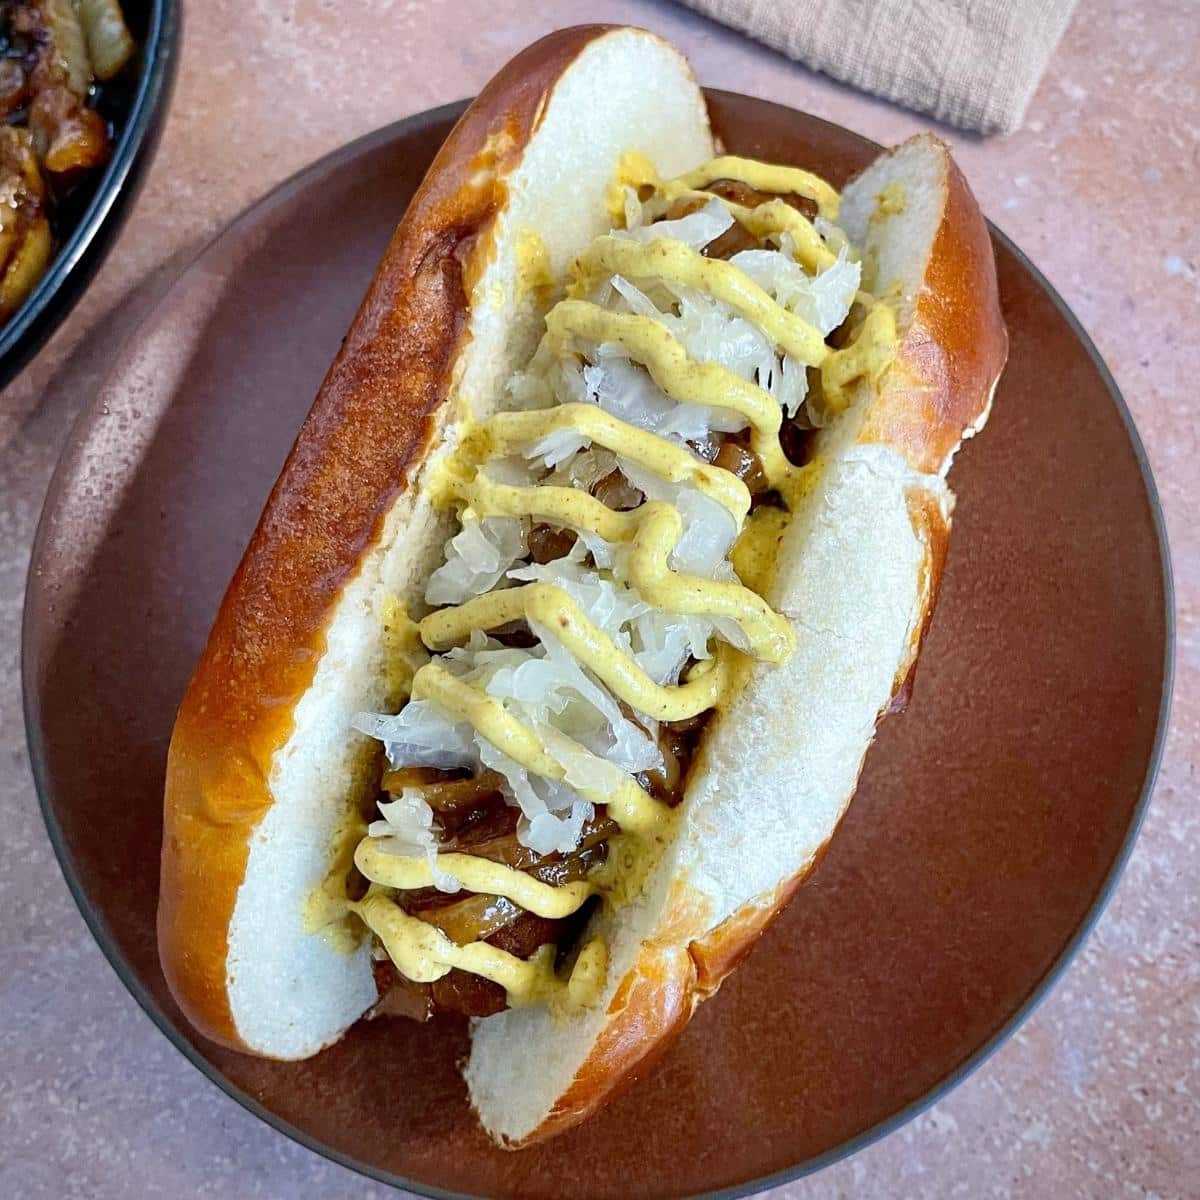 A vegan bratwurst inside a pretzel bun, topped with sauerkraut, onions, and spicy mustard.